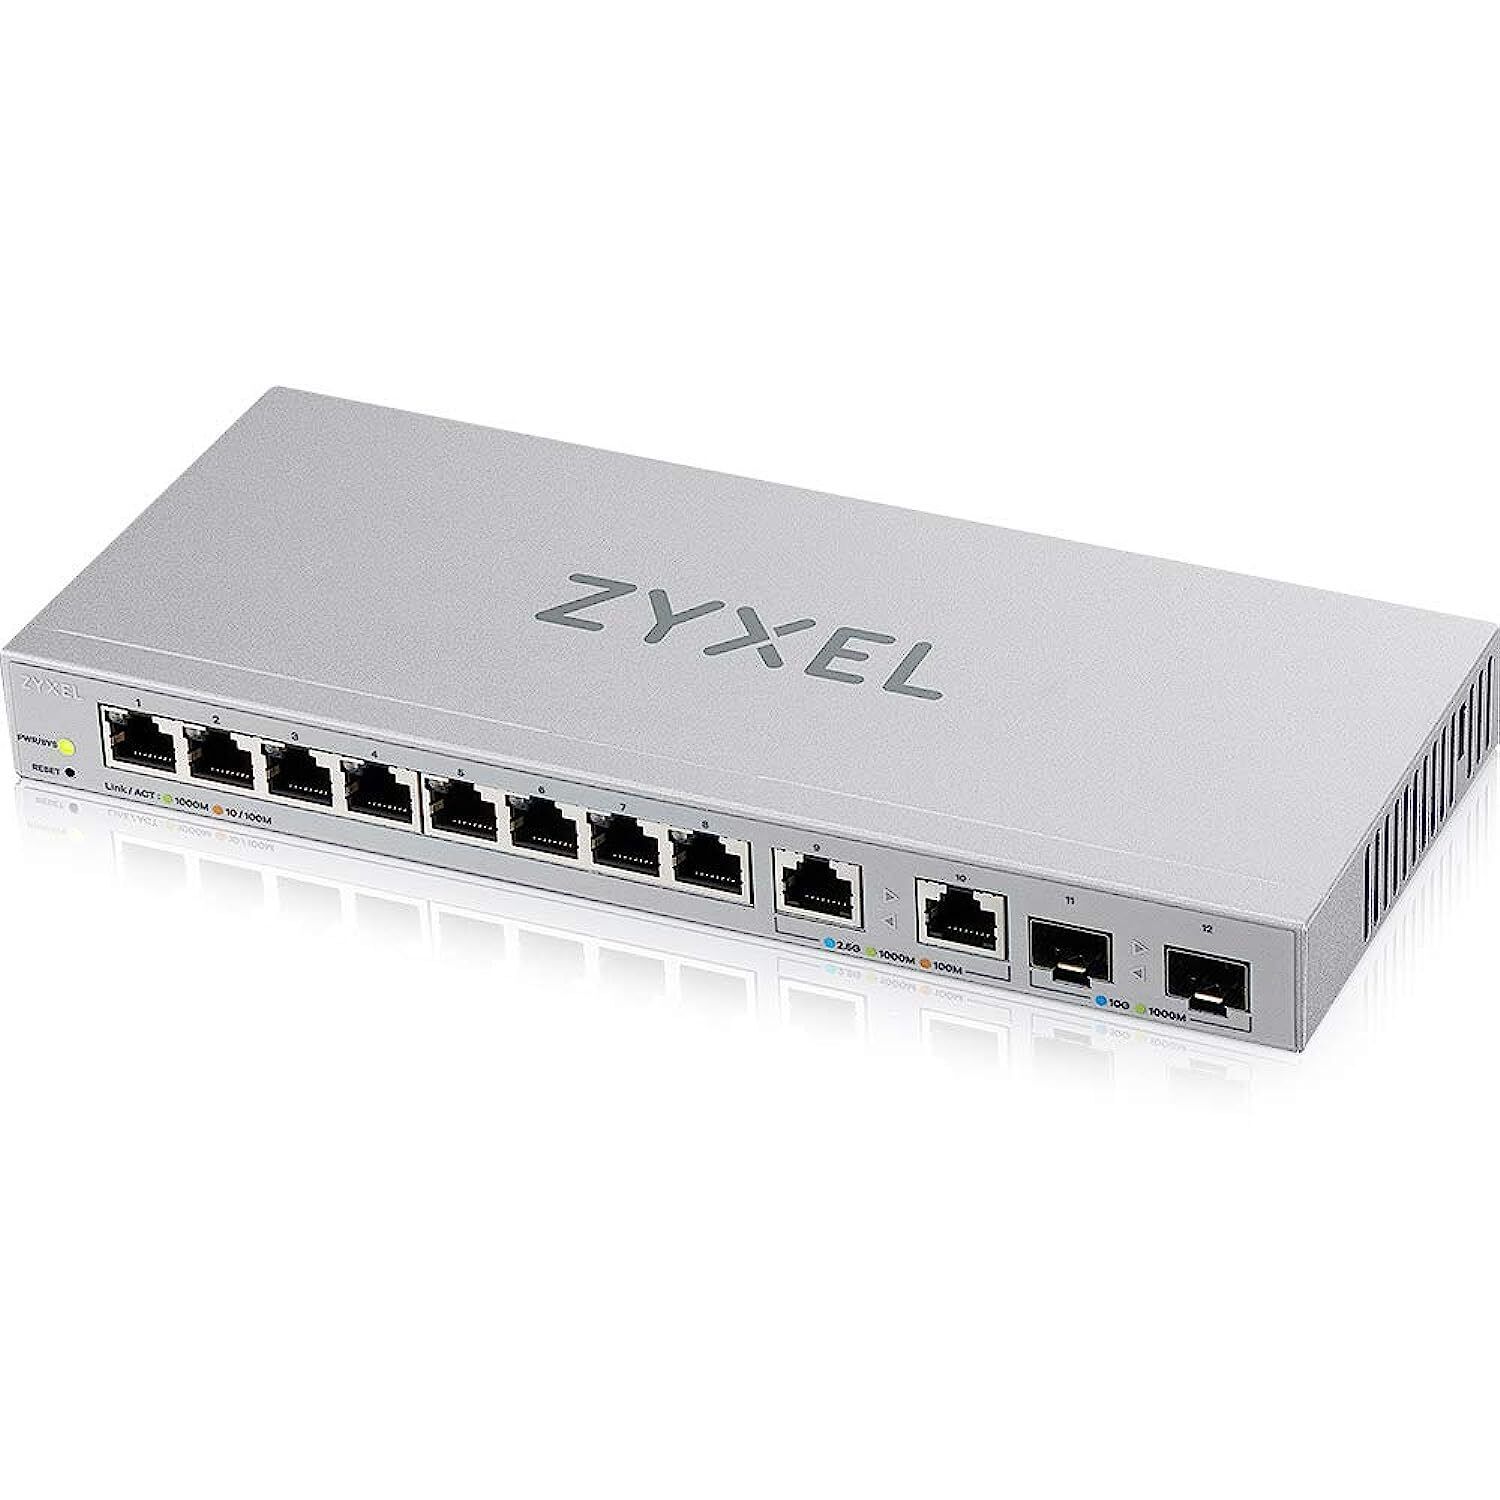 Zyxel Multi-Gig 12-Port Web Managed Switch with 2-Port 2.5G/2-Port 10G SFP+ De